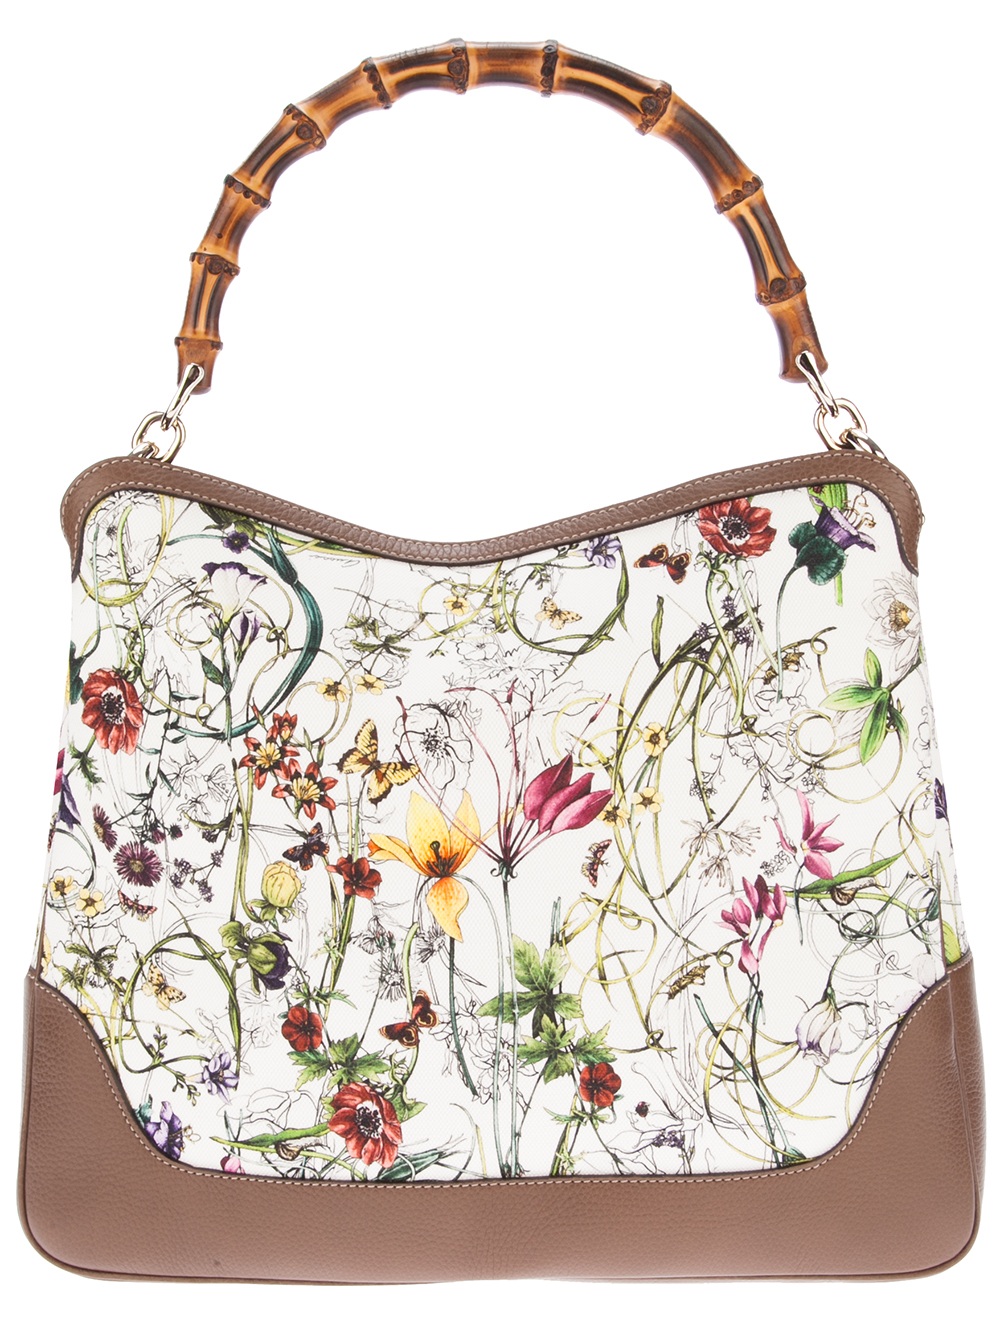 Gucci Flower Print Bag in Brown - Lyst